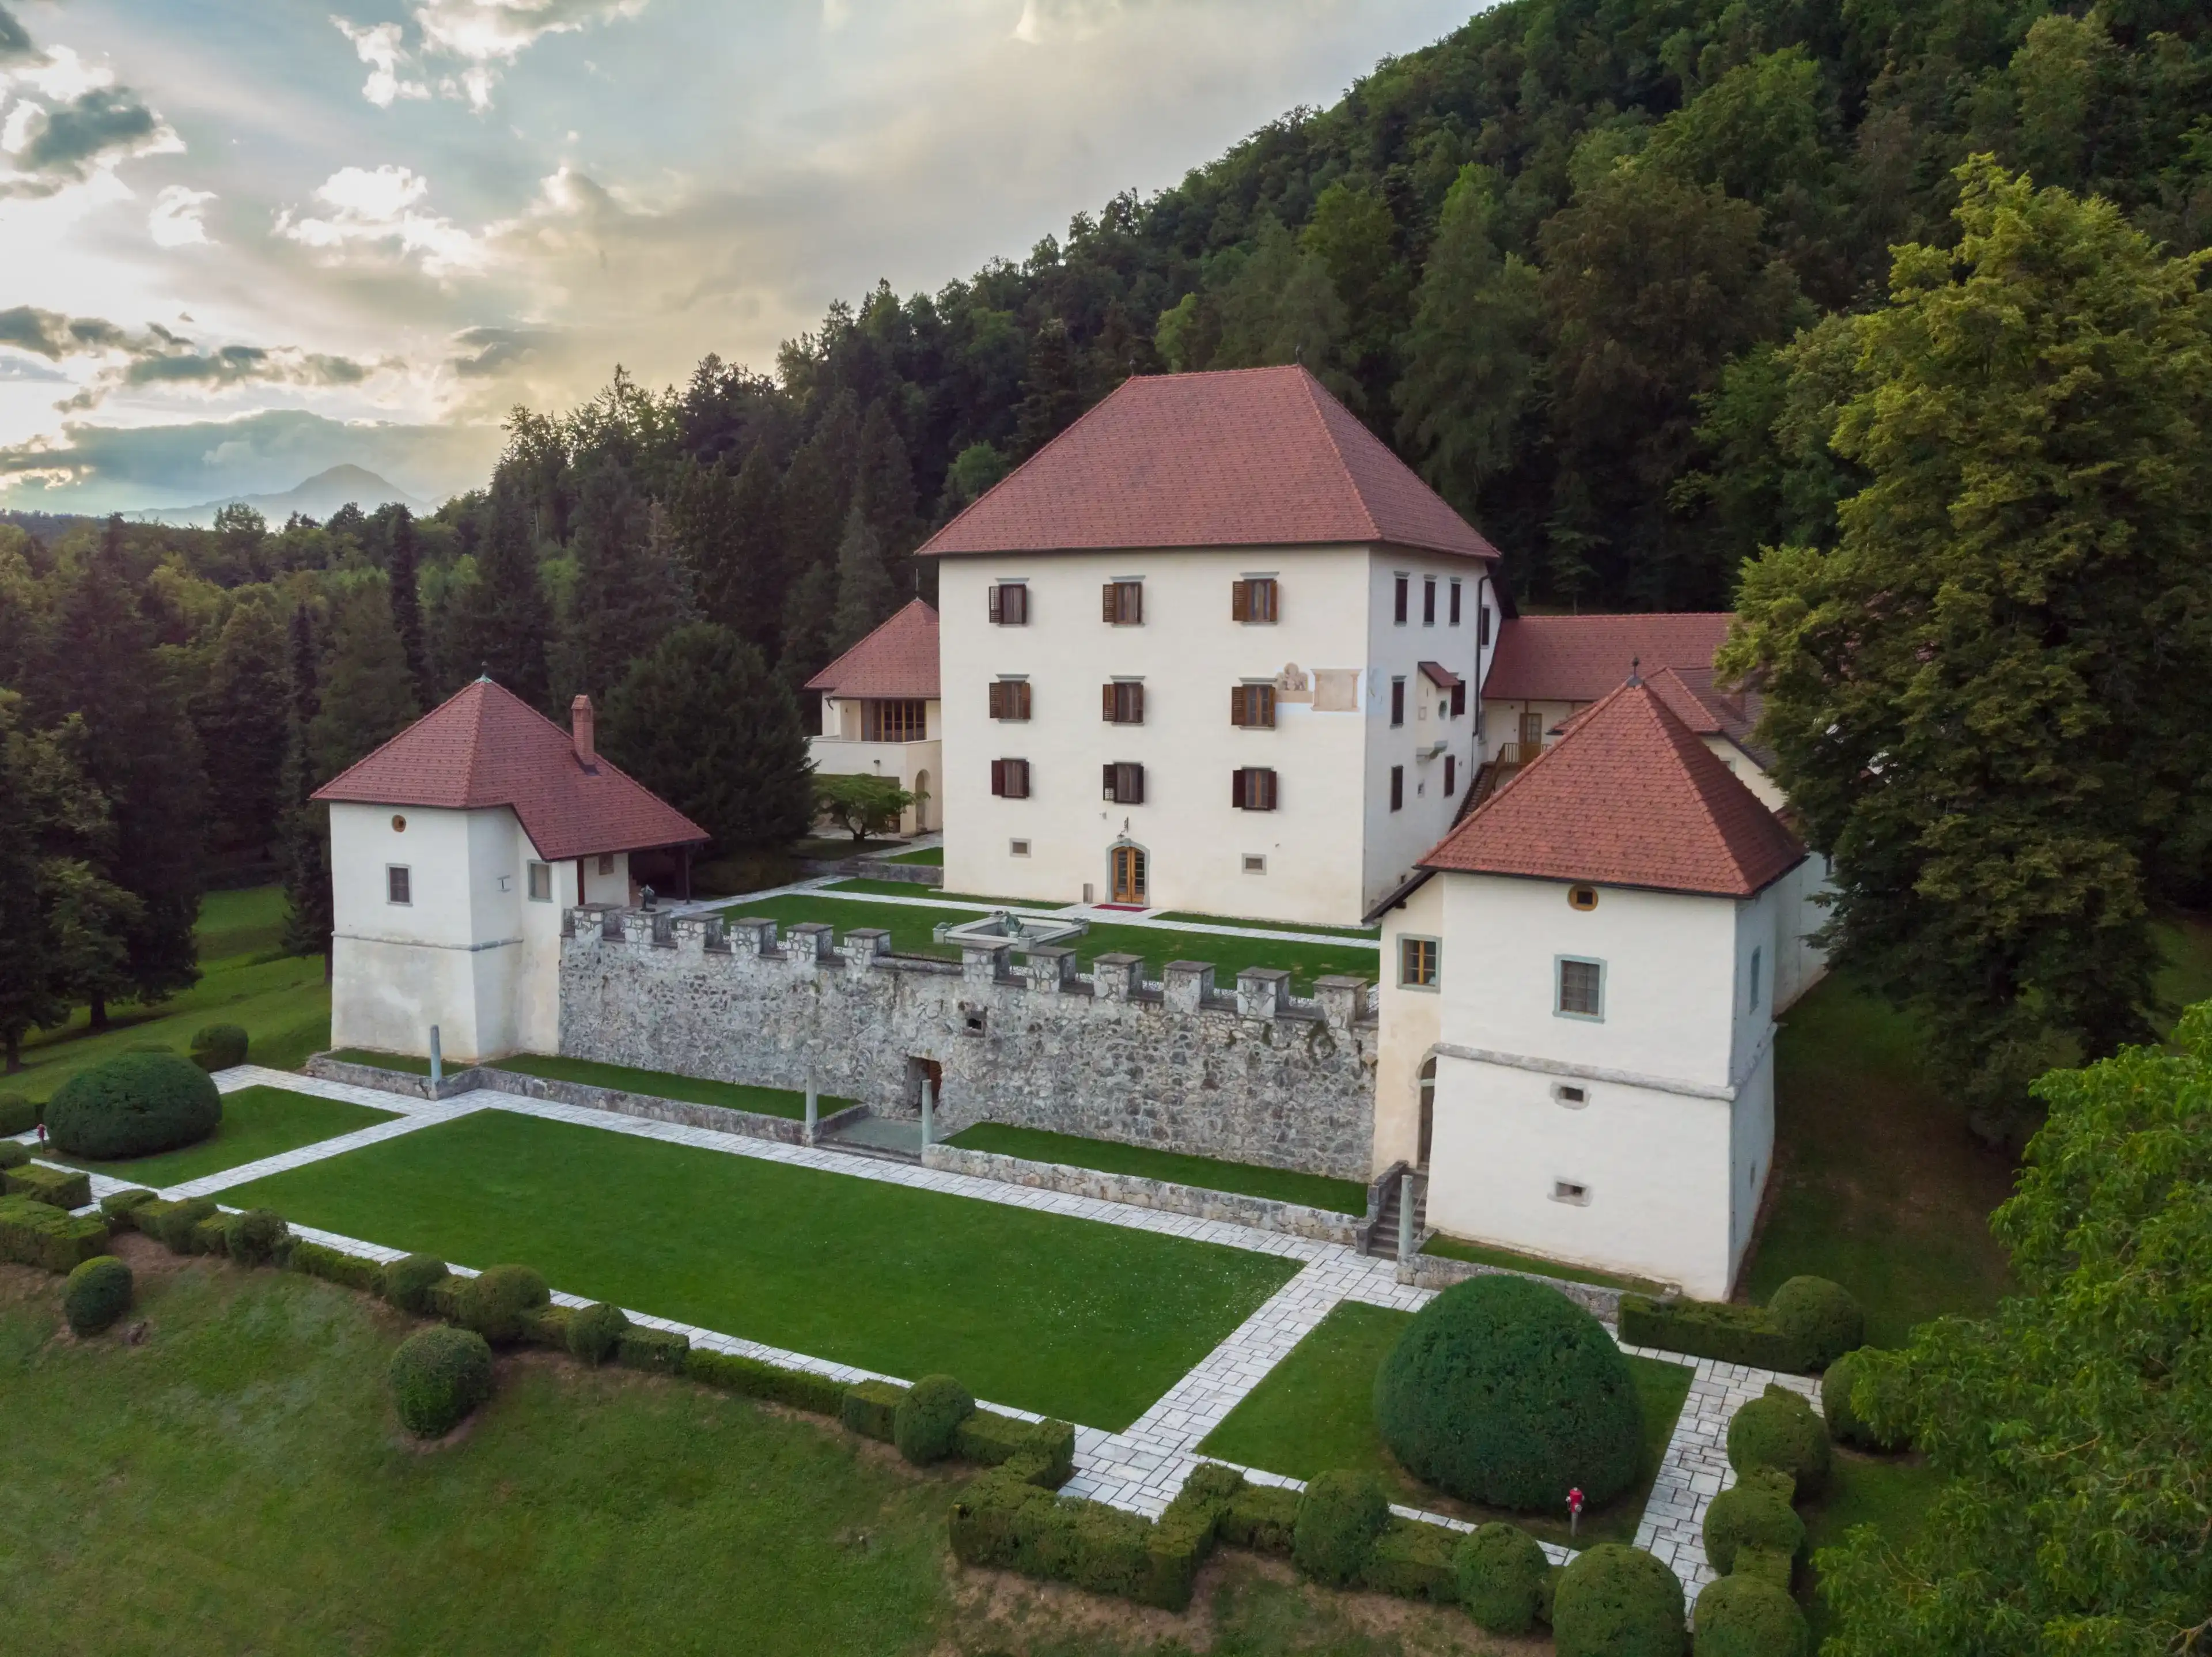 Panoramic view of Strmol castle at Gorenjska region, Slovenia.